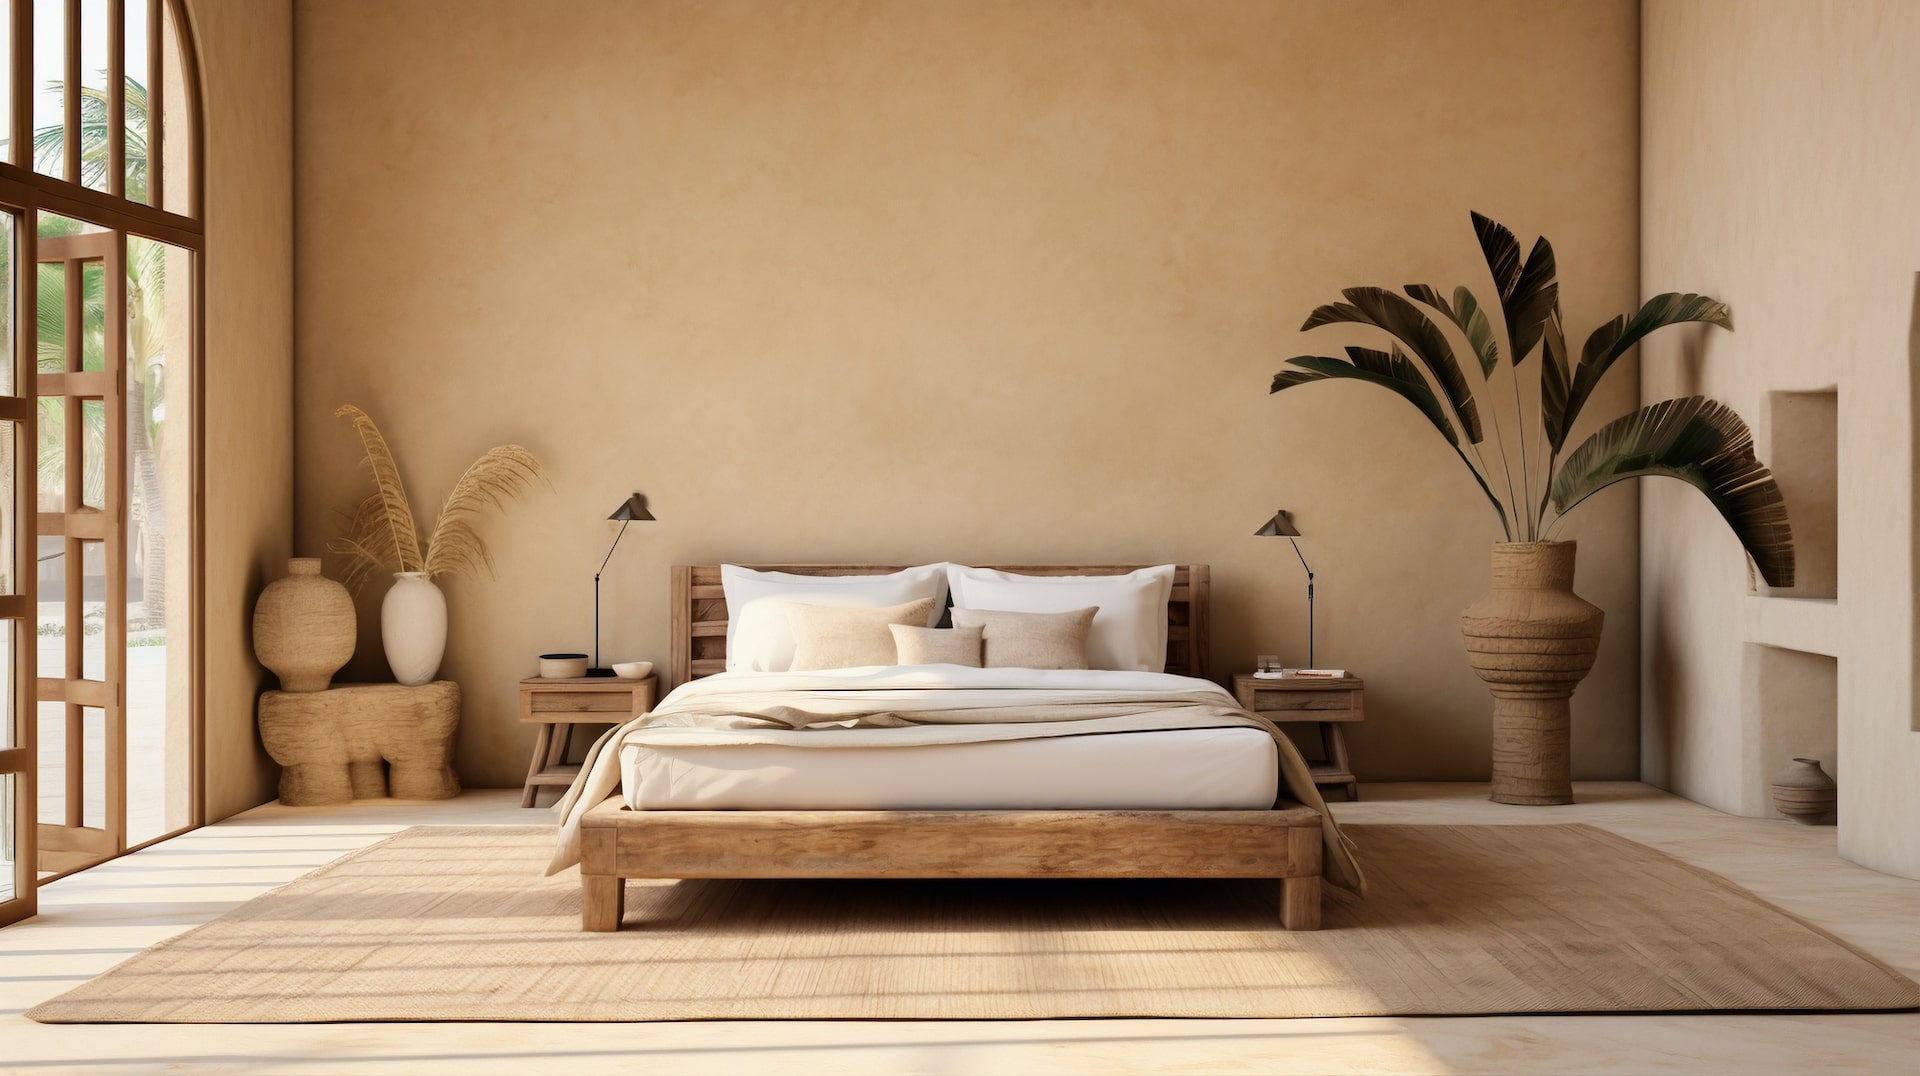 Designs that Shape Your Dreams: Ceek Wood Bedroom